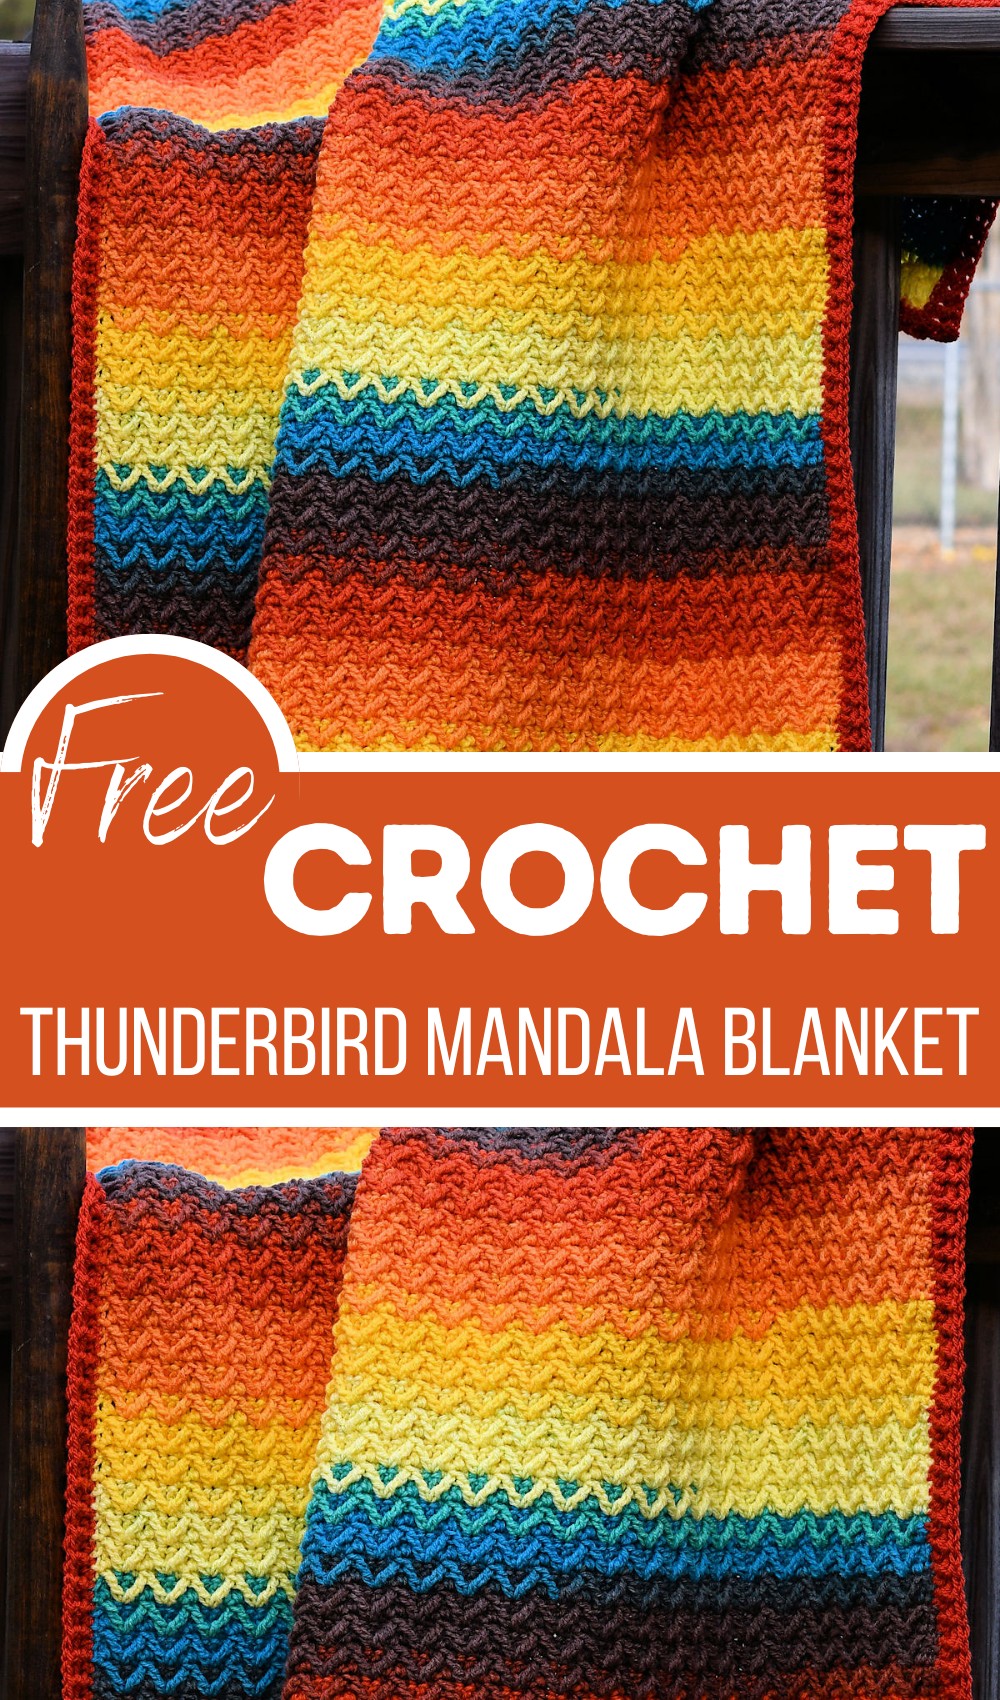 Thunderbird Mandala Blanket